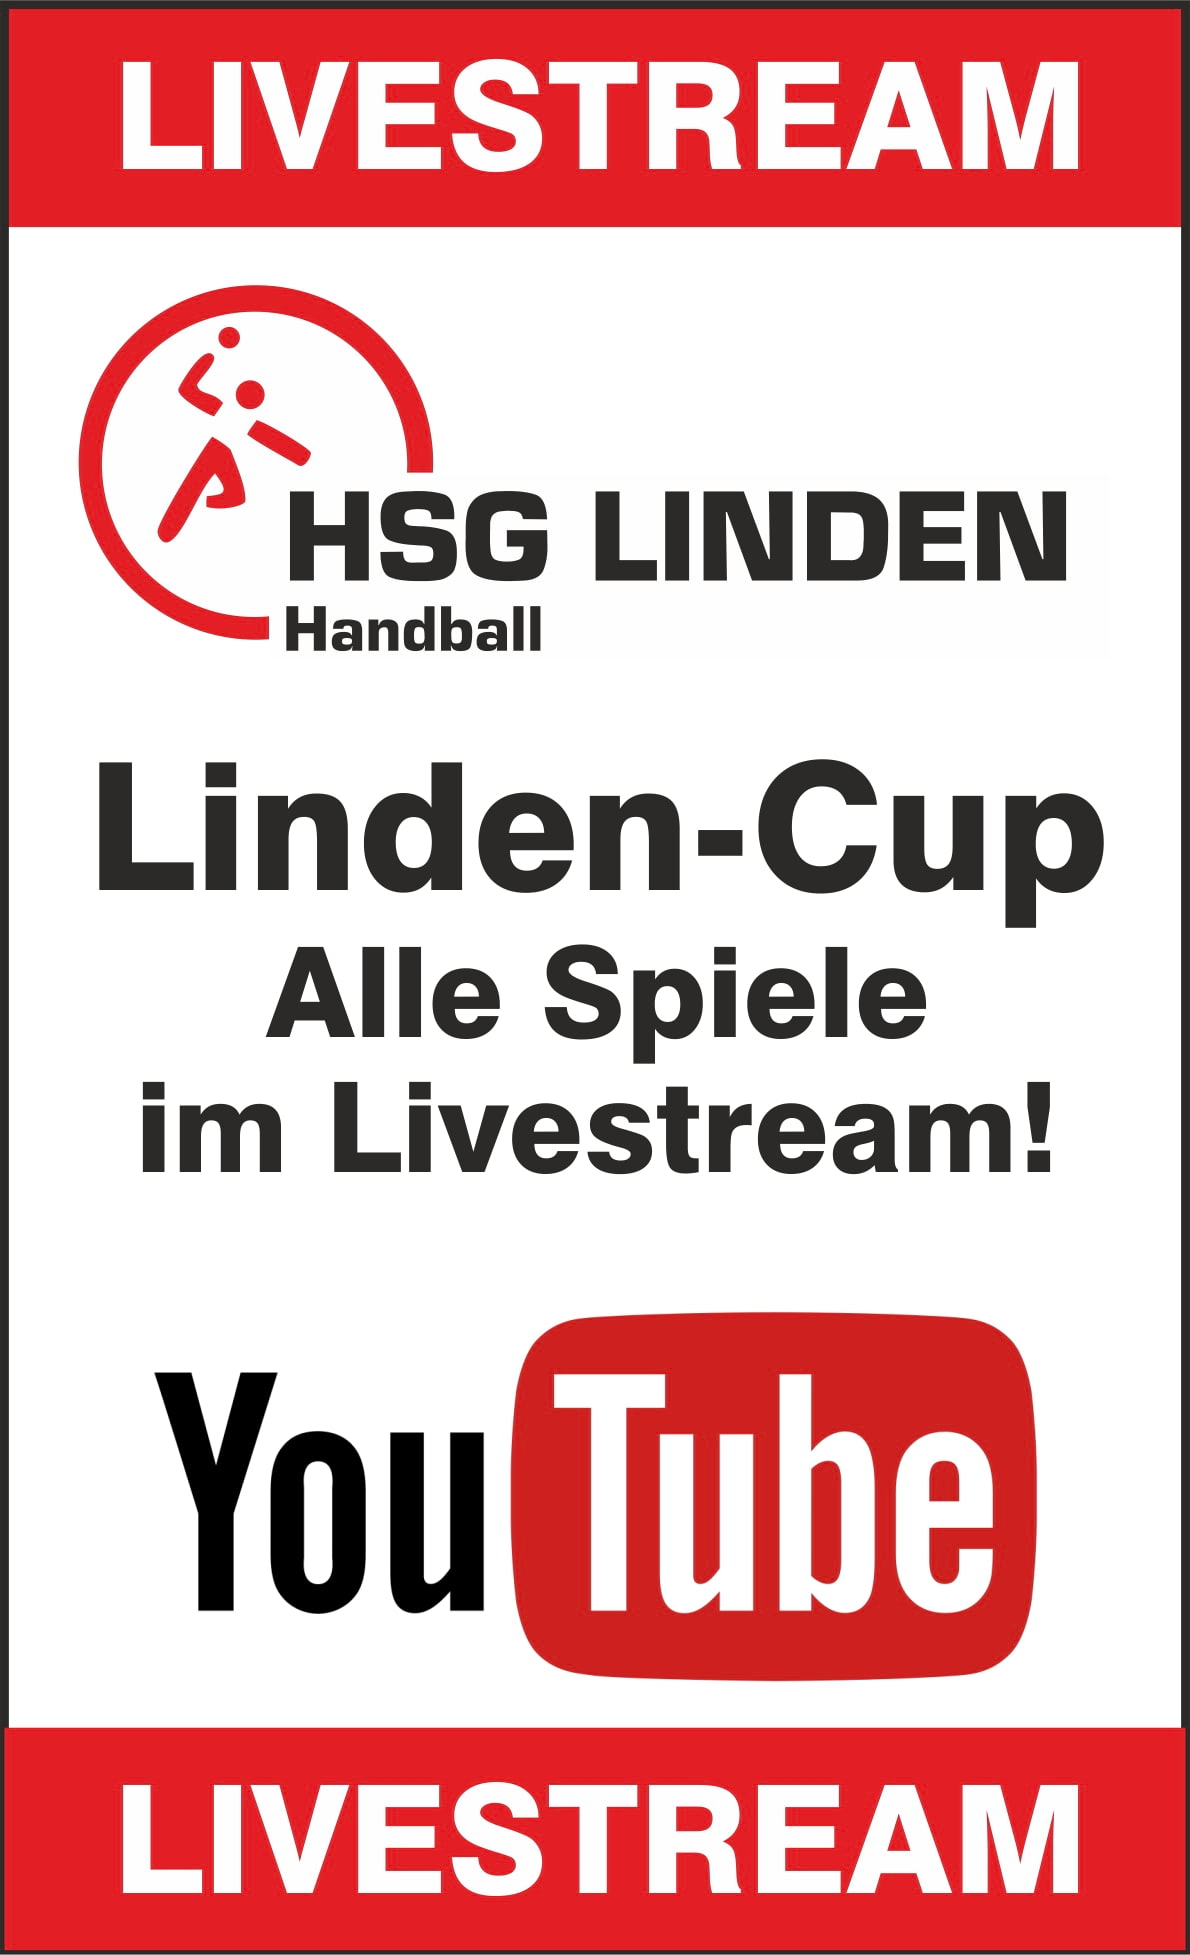 Livestream Linden-Cup Banner